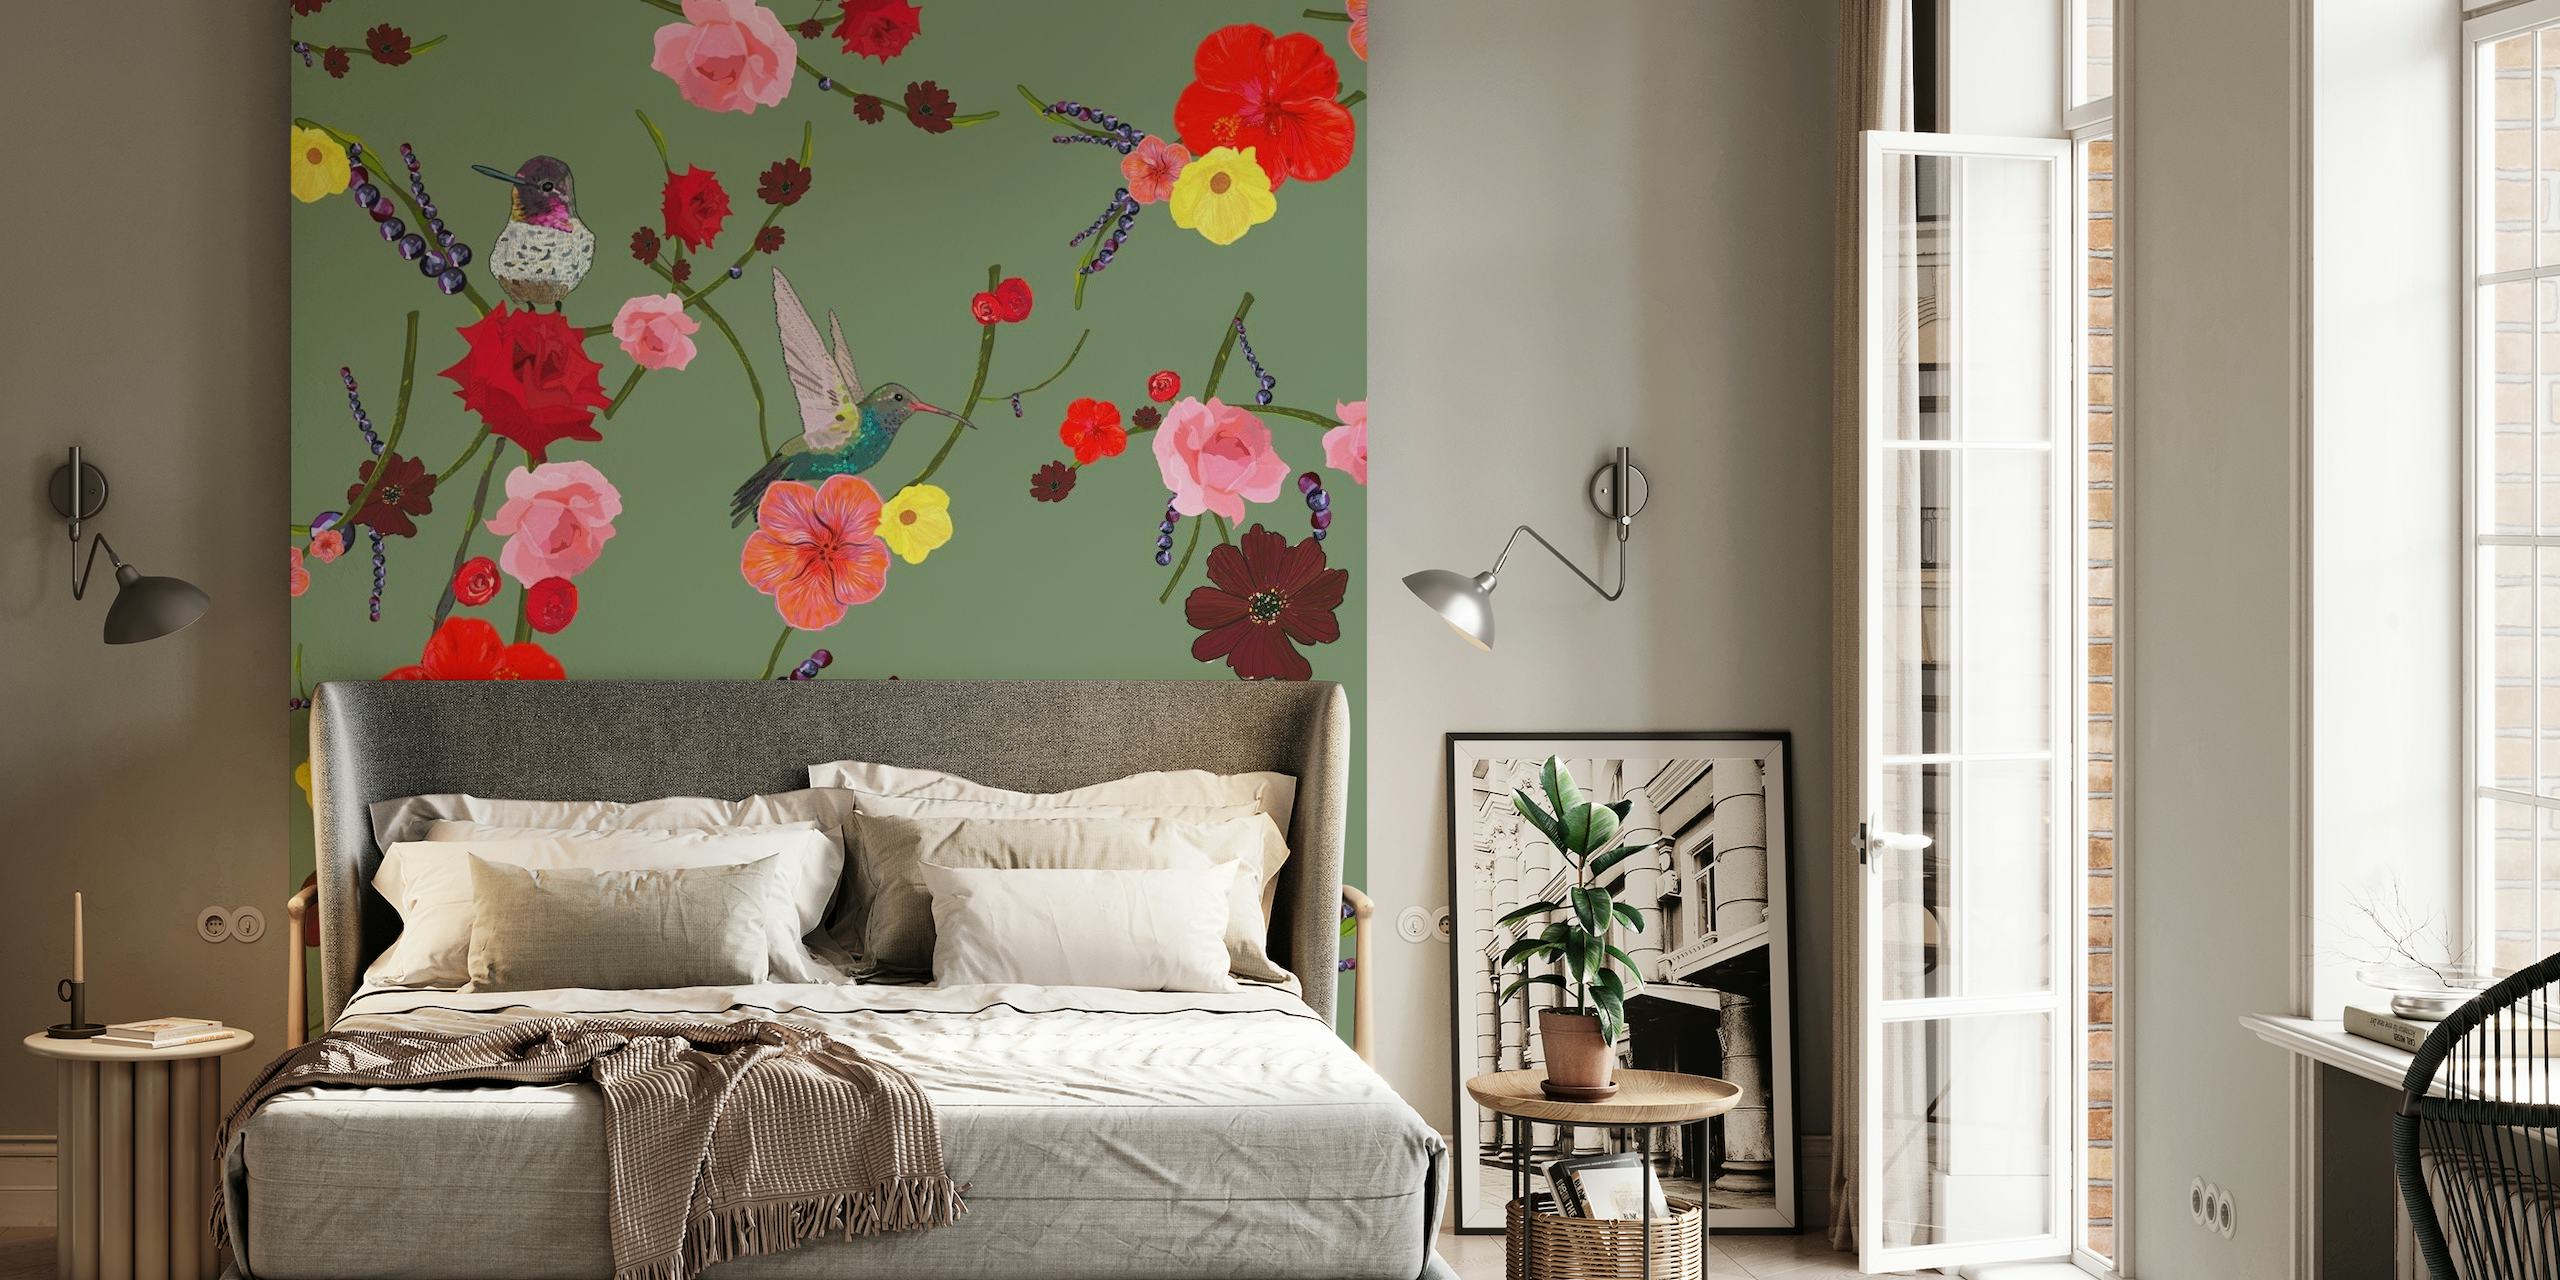 Cvjetni zidni mural s pticama i hibiskus ružama na zelenoj pozadini